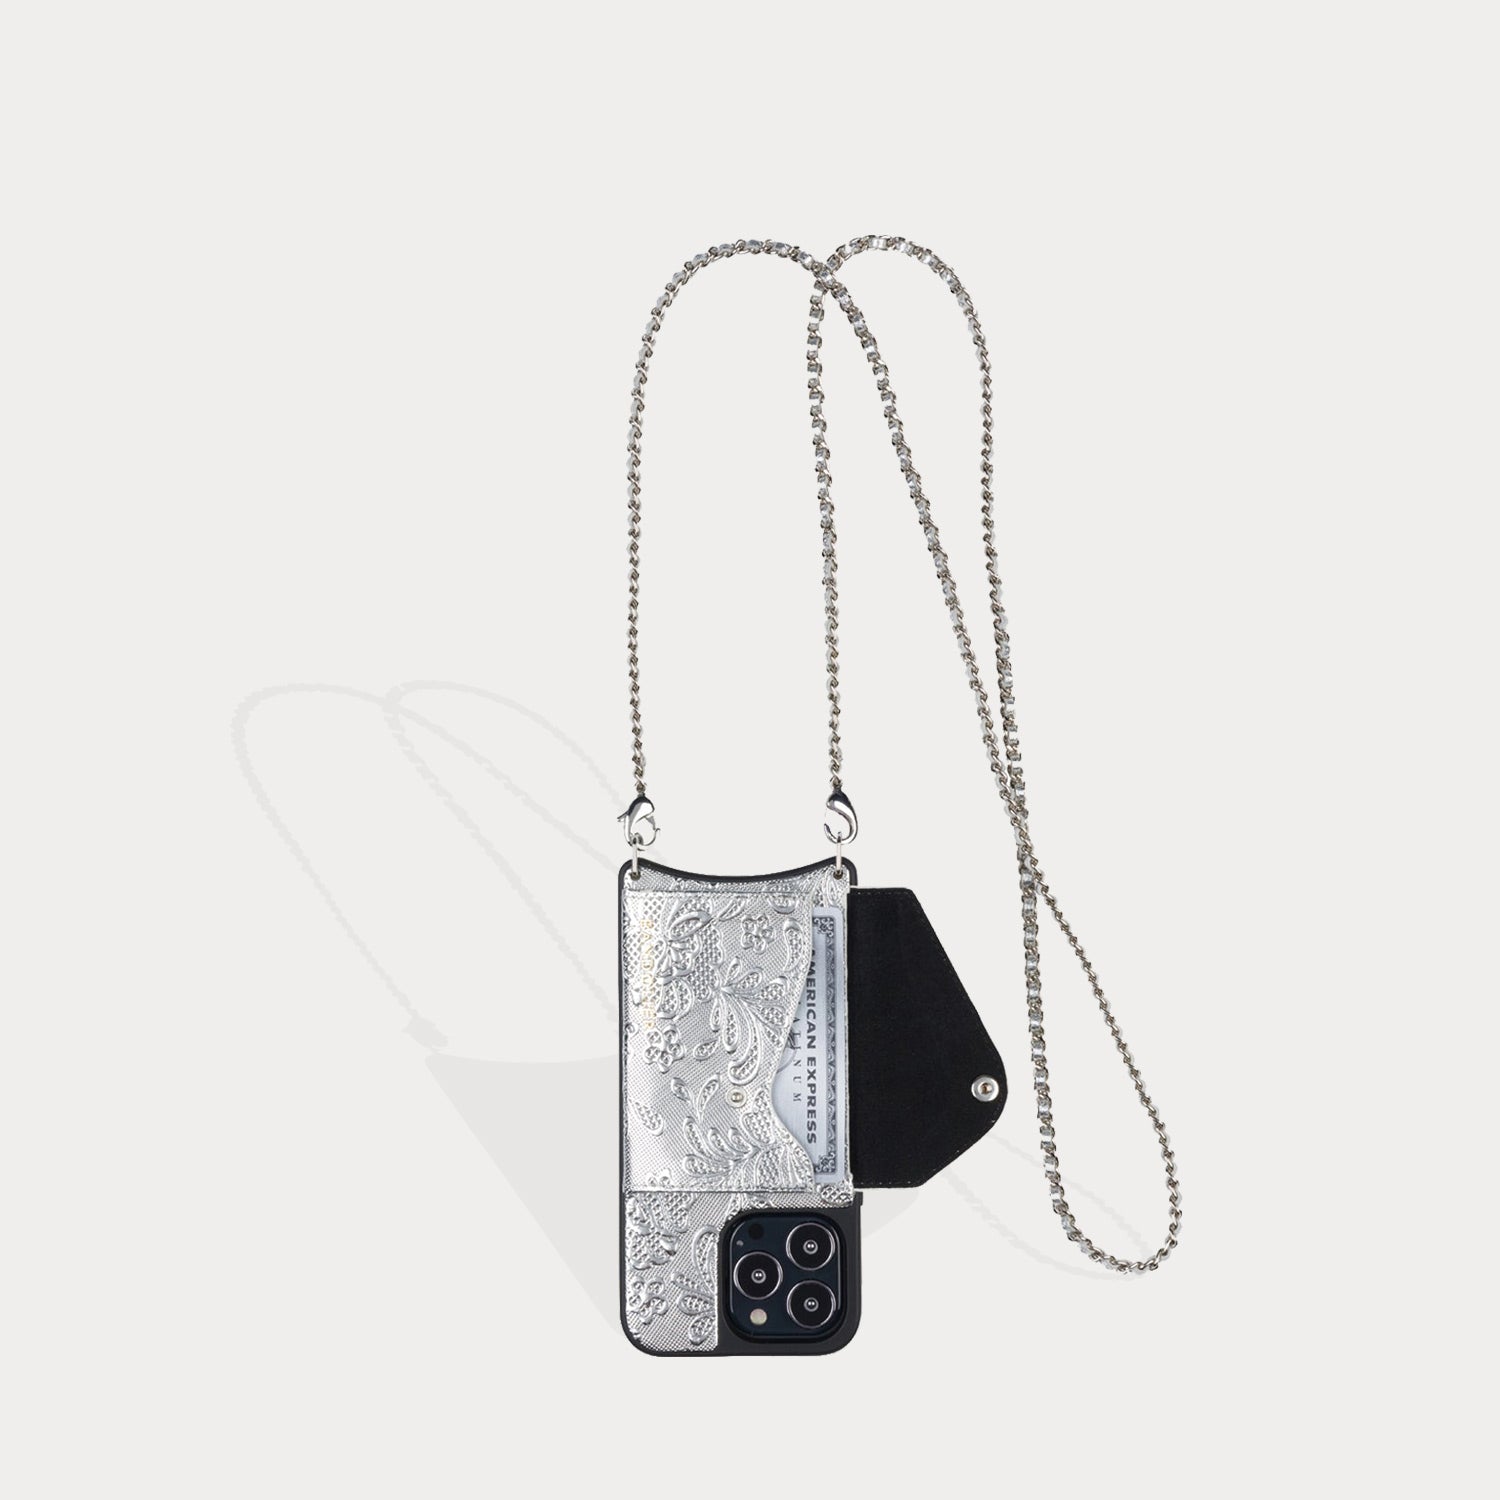 Lily Lace Side Slot Bandolier - Metallic Silver/Silver Accessories Bandolier 